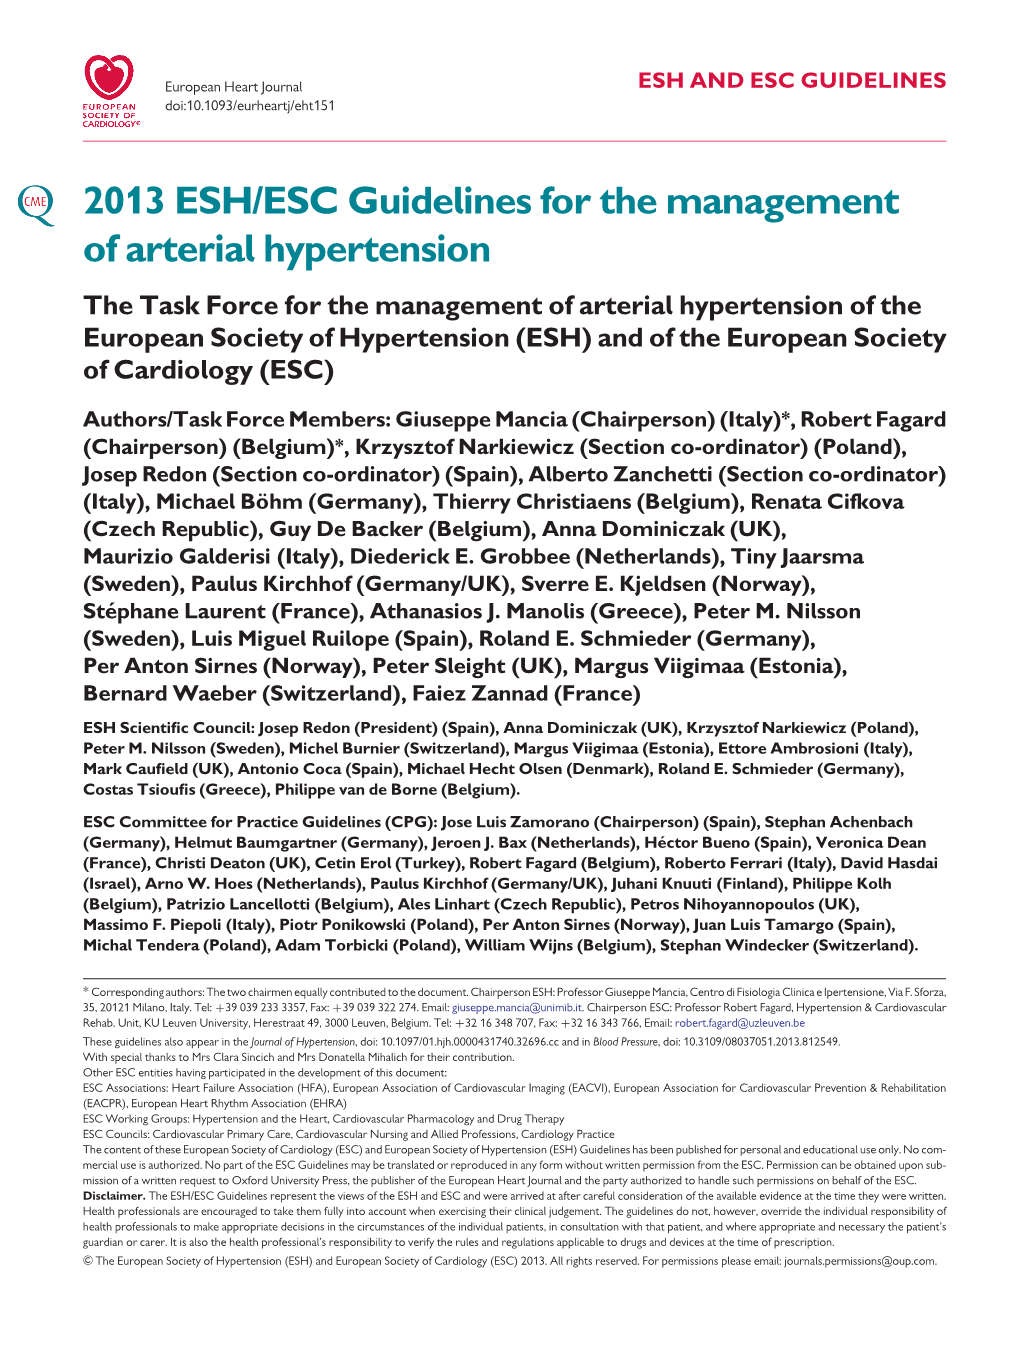 ESH/ESC Guidelines for Themanagement of Arterial